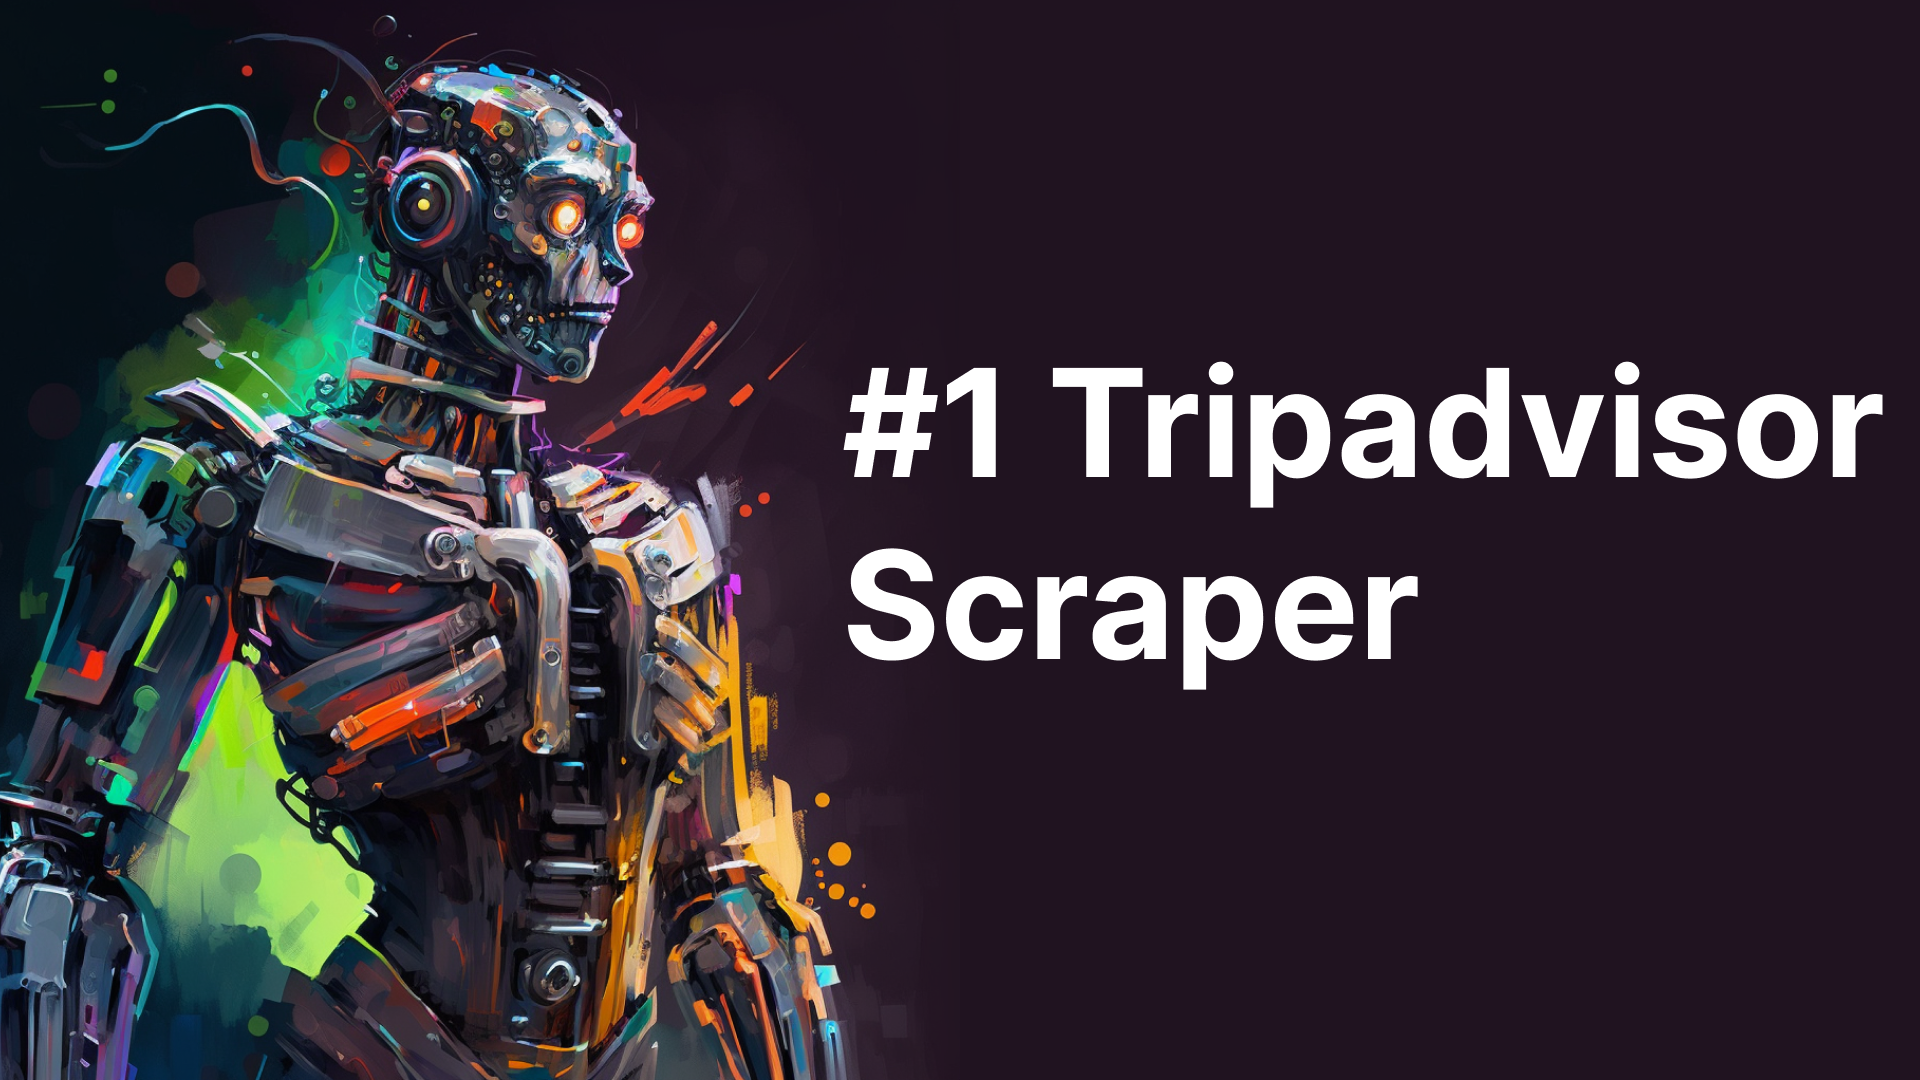 Tripadvisor Scraper Featured Image